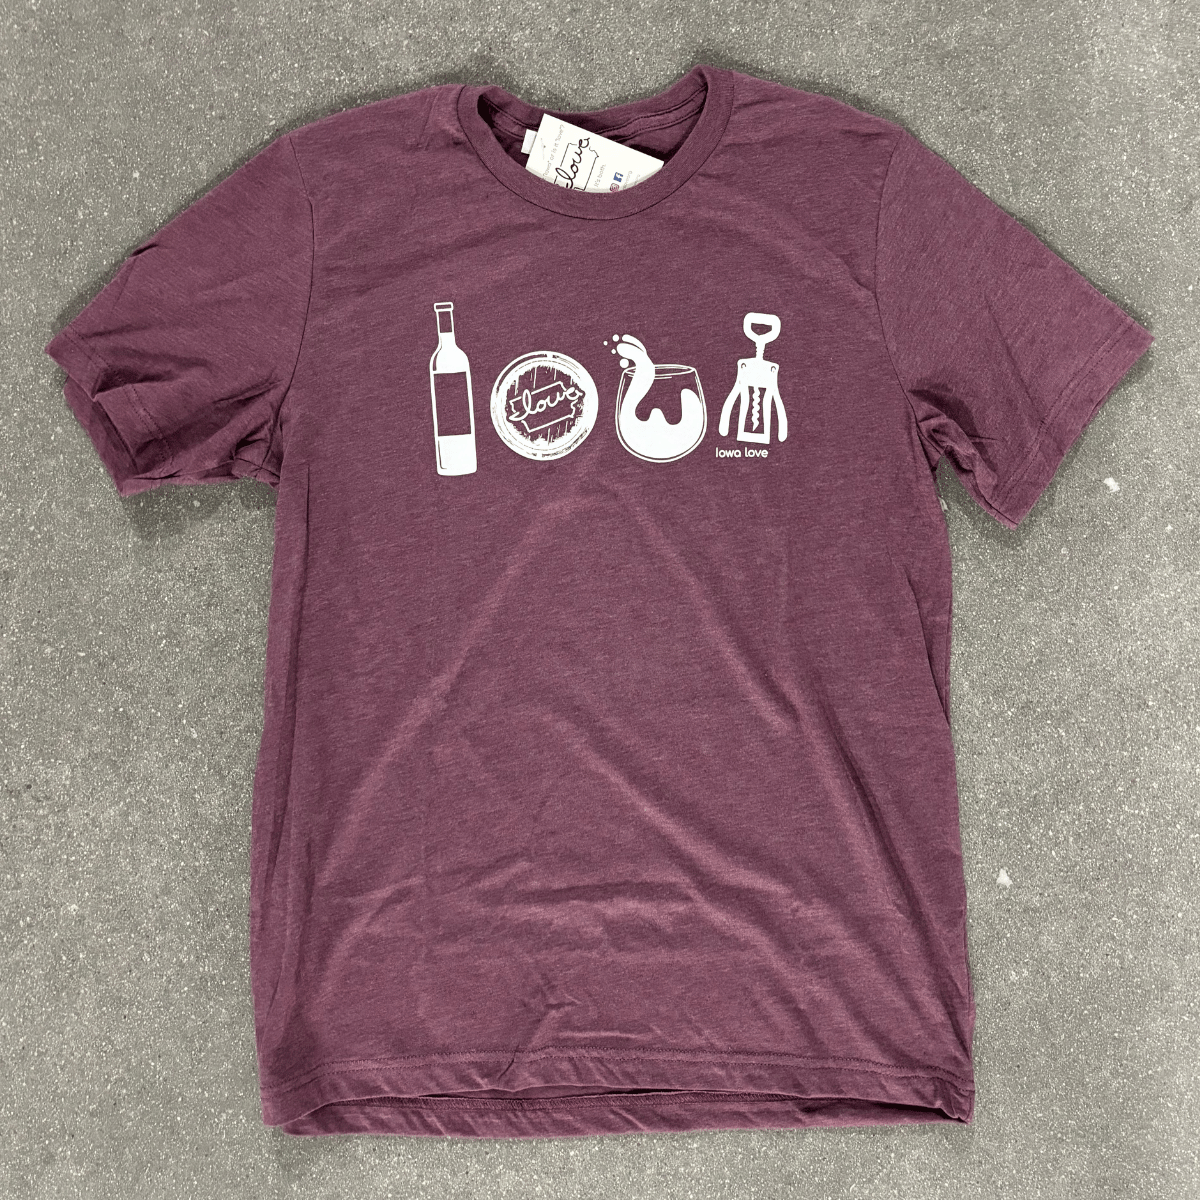 "IOWA Wine" T-Shirt in Heather Maroon